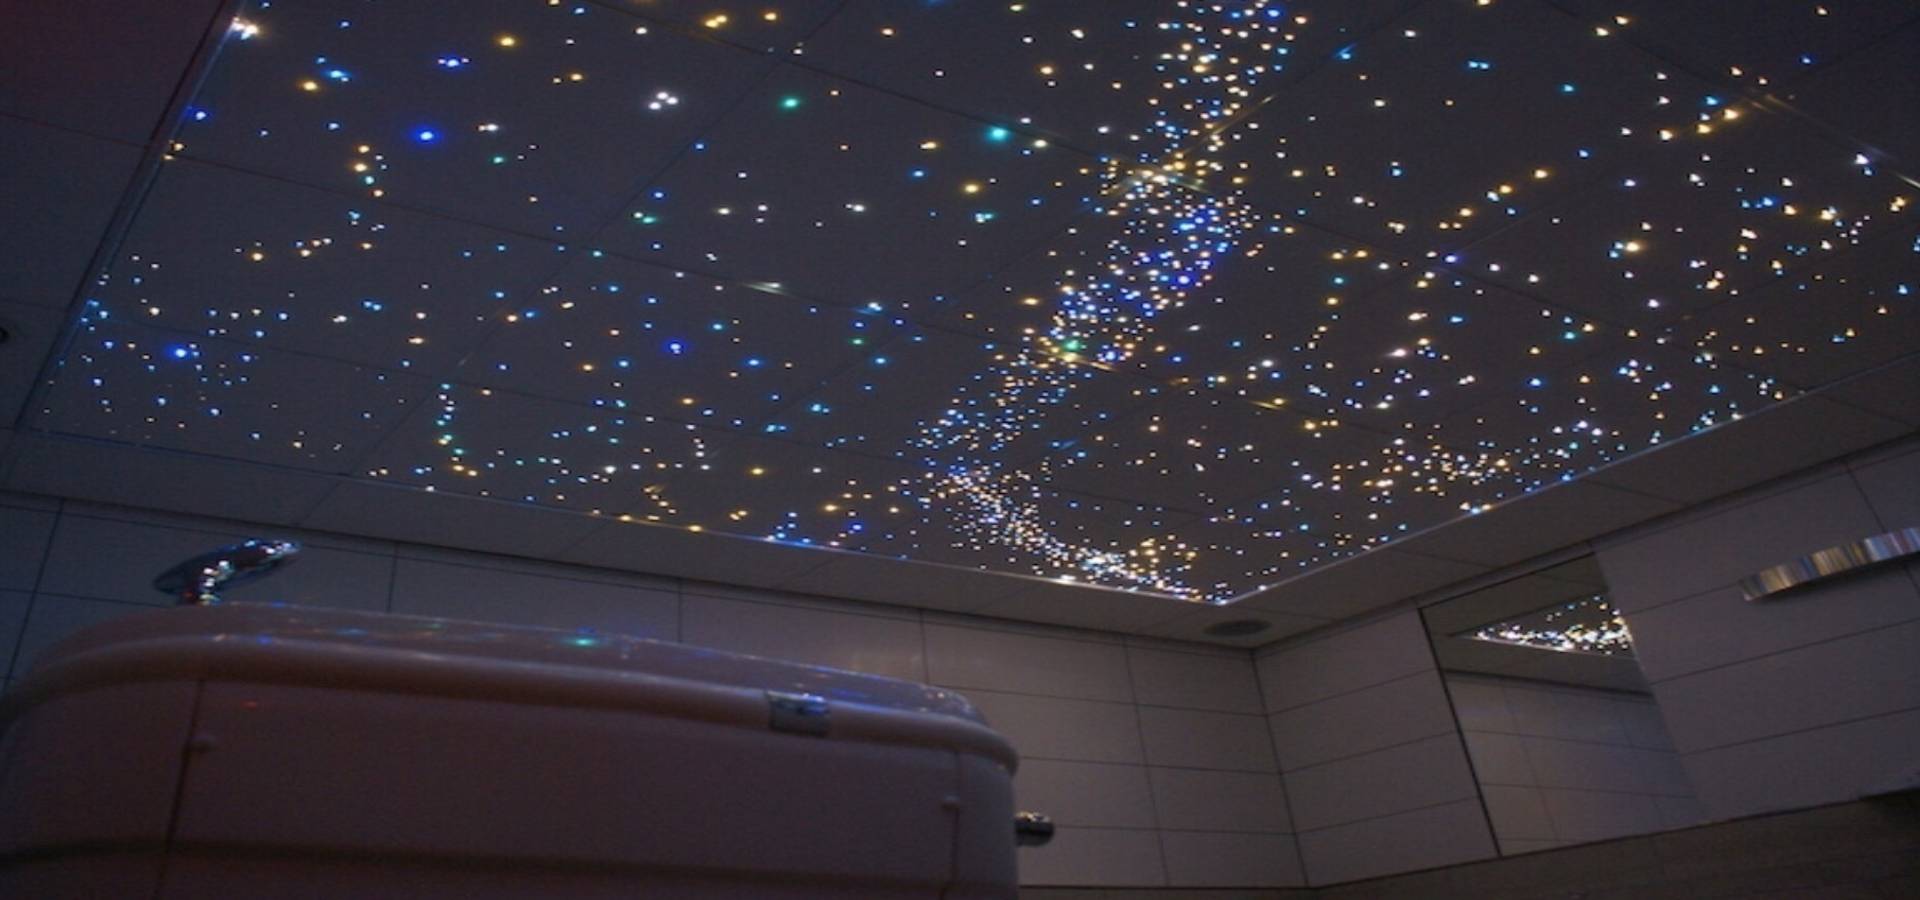 Spa Bathroom Ceiling Lights Star Lights For Bedroom Ceiling Light Panels Fiber Optic Star Ceiling Panels Twinkle Shooting Stars Homify